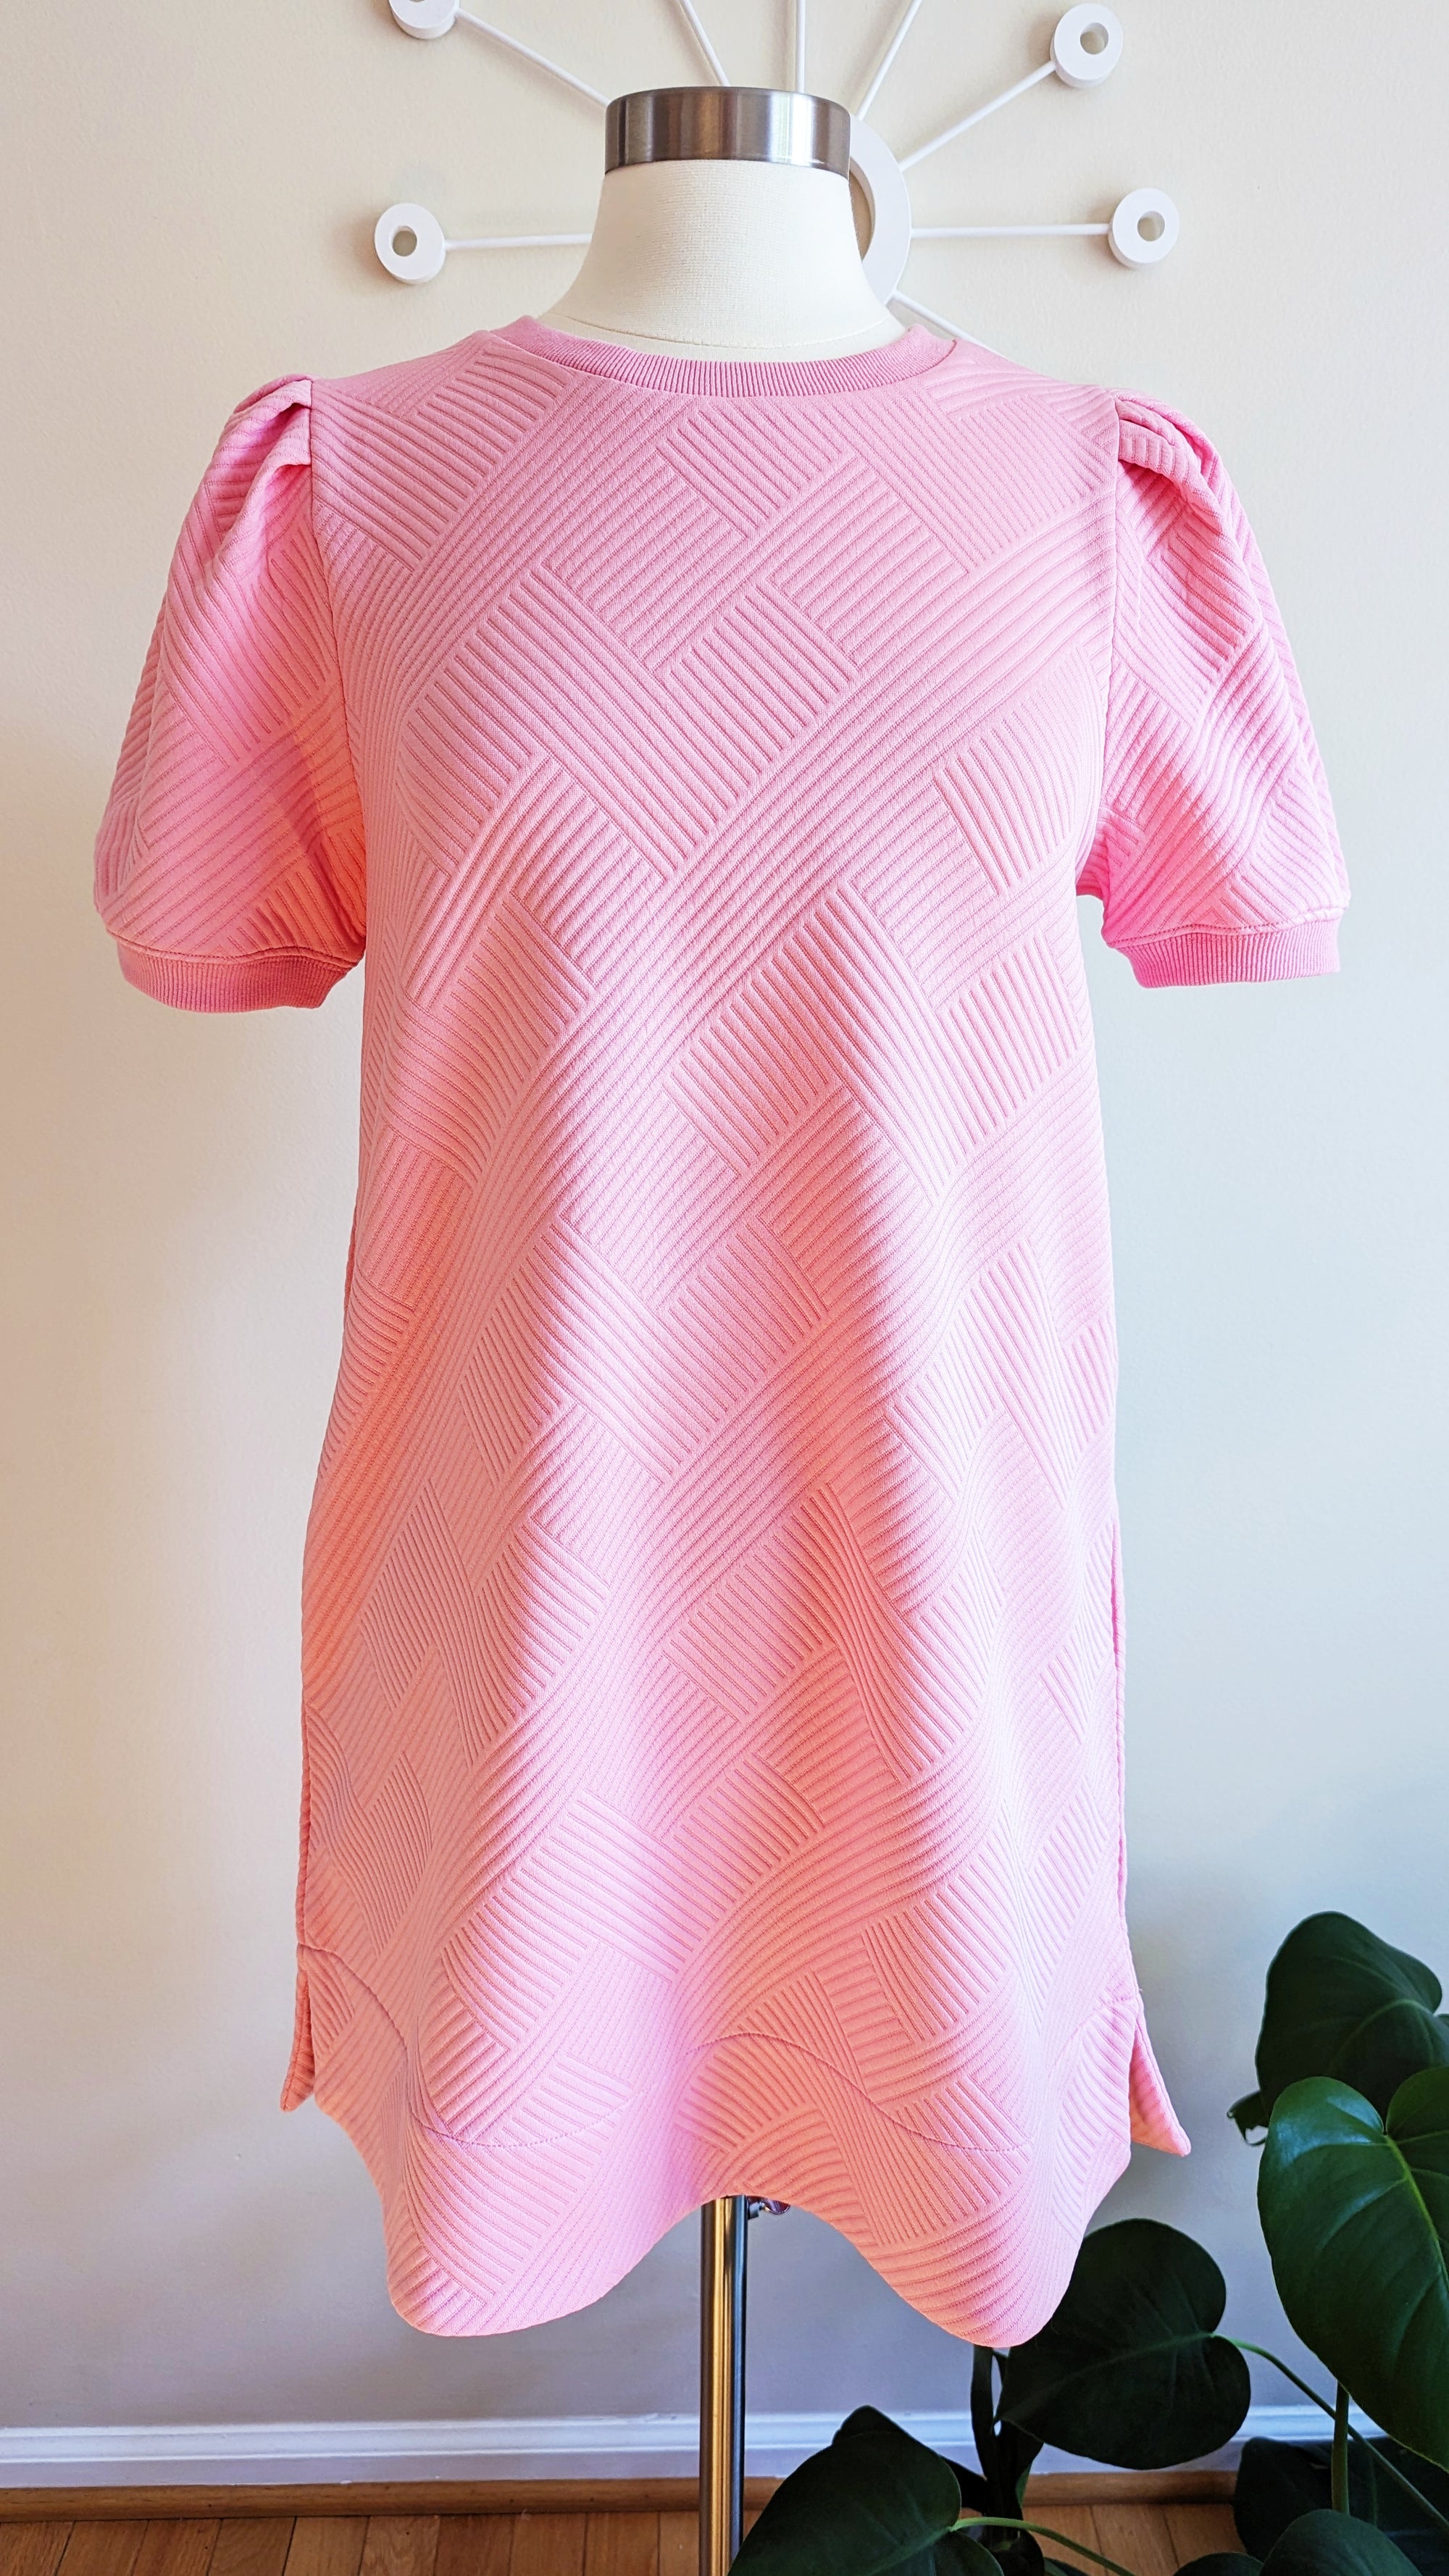 RESTOCK COMING SOON! 🩷🩷 Baby Pink Textured Dress